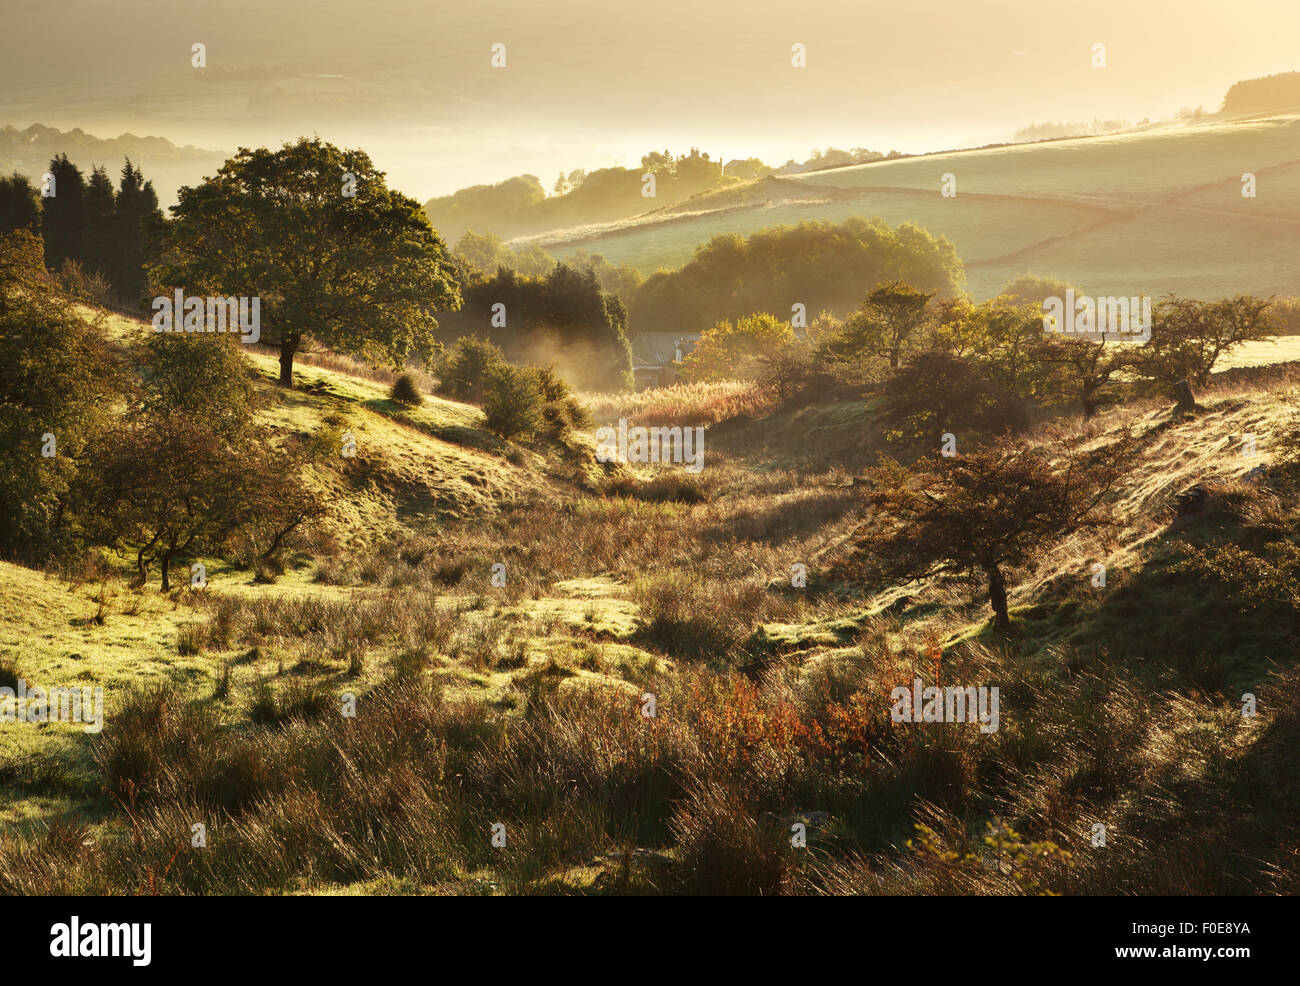 Bellissimo paesaggio inglese nel Peak District , a nord ovest dell'Inghilterra. Foto Stock